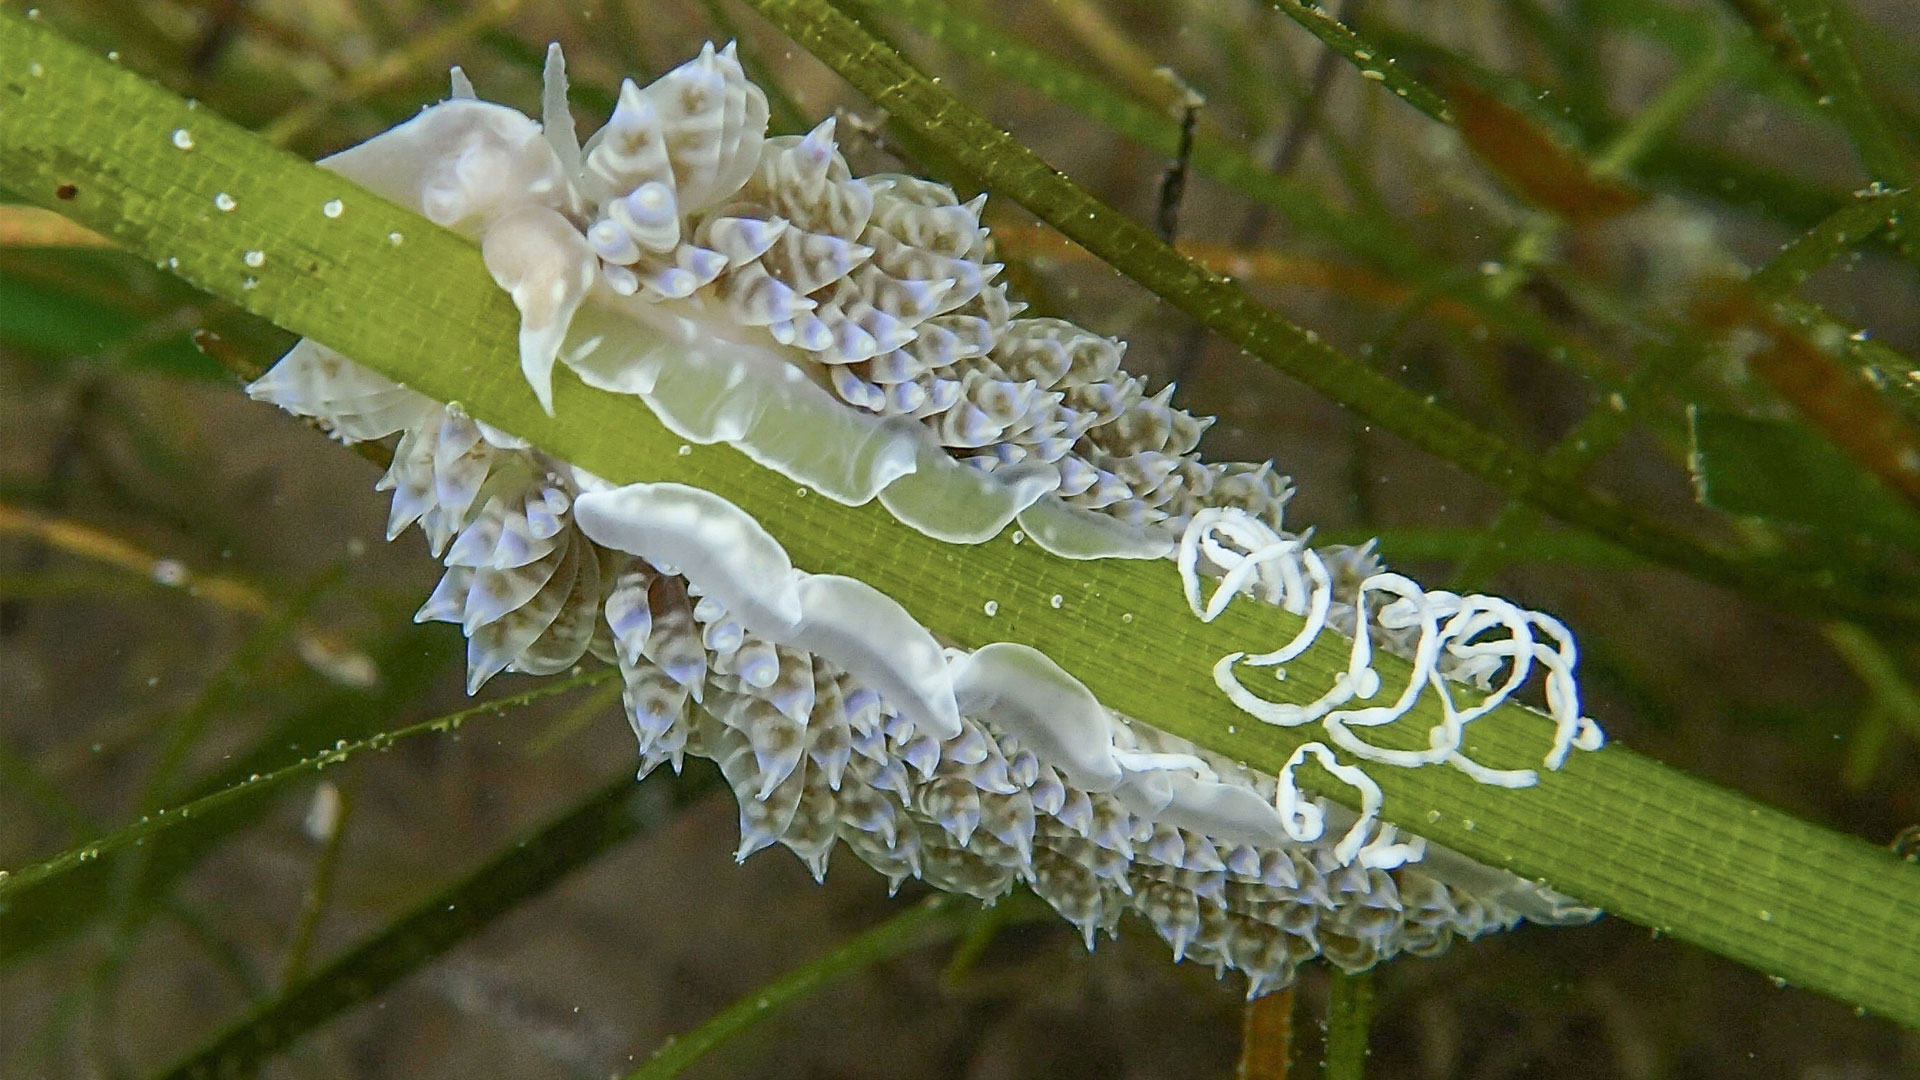 Imagen de Baeolidia moebii, gasterópodo nudibranquio establecido en el golfo de Kalloni, Mar Egeo